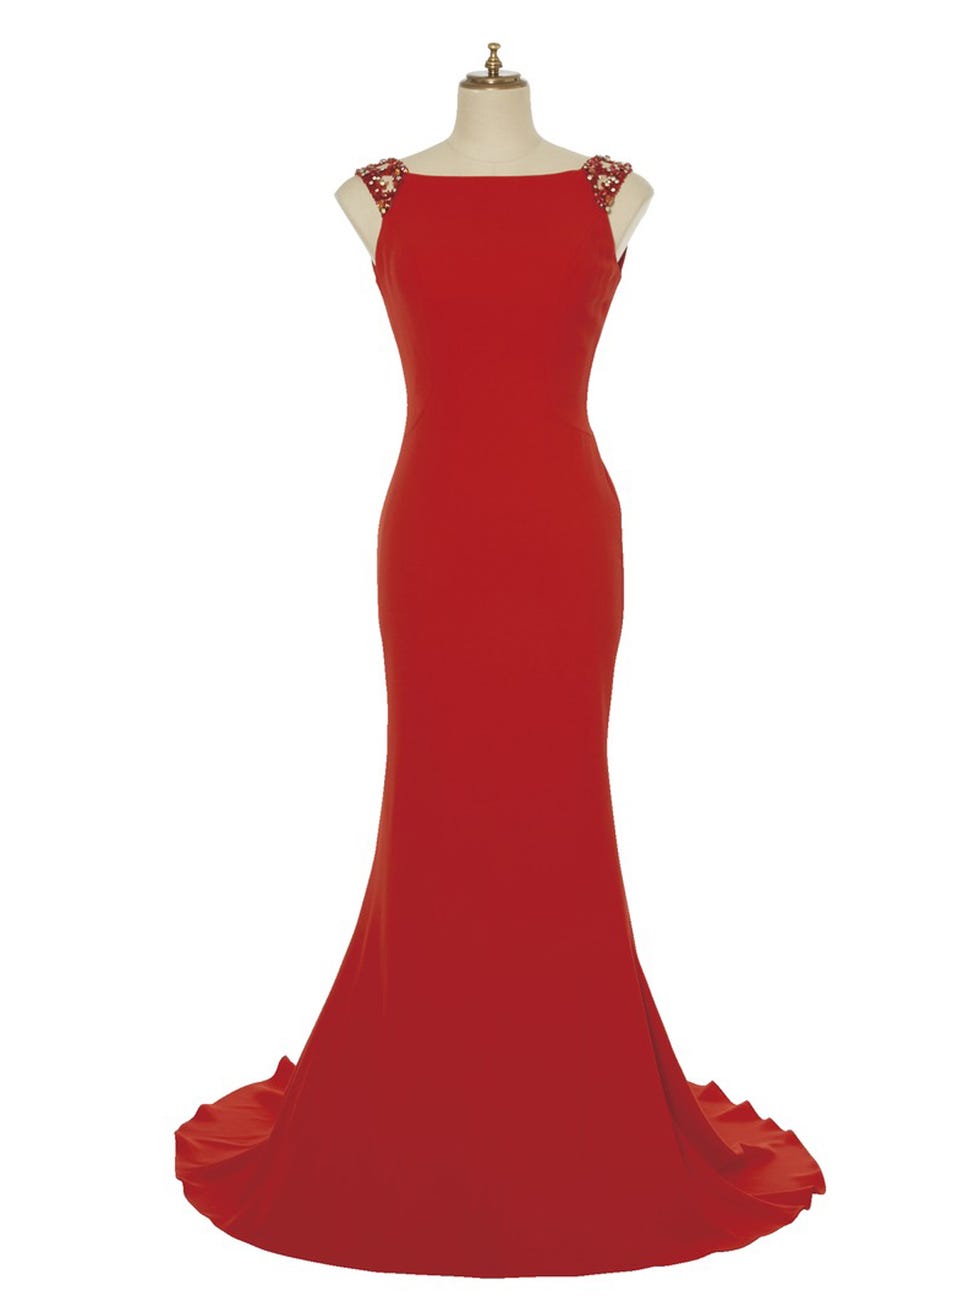 Dress, Clothing, Gown, Day dress, Red, Cocktail dress, A-line, Formal wear, Shoulder, Strapless dress, 